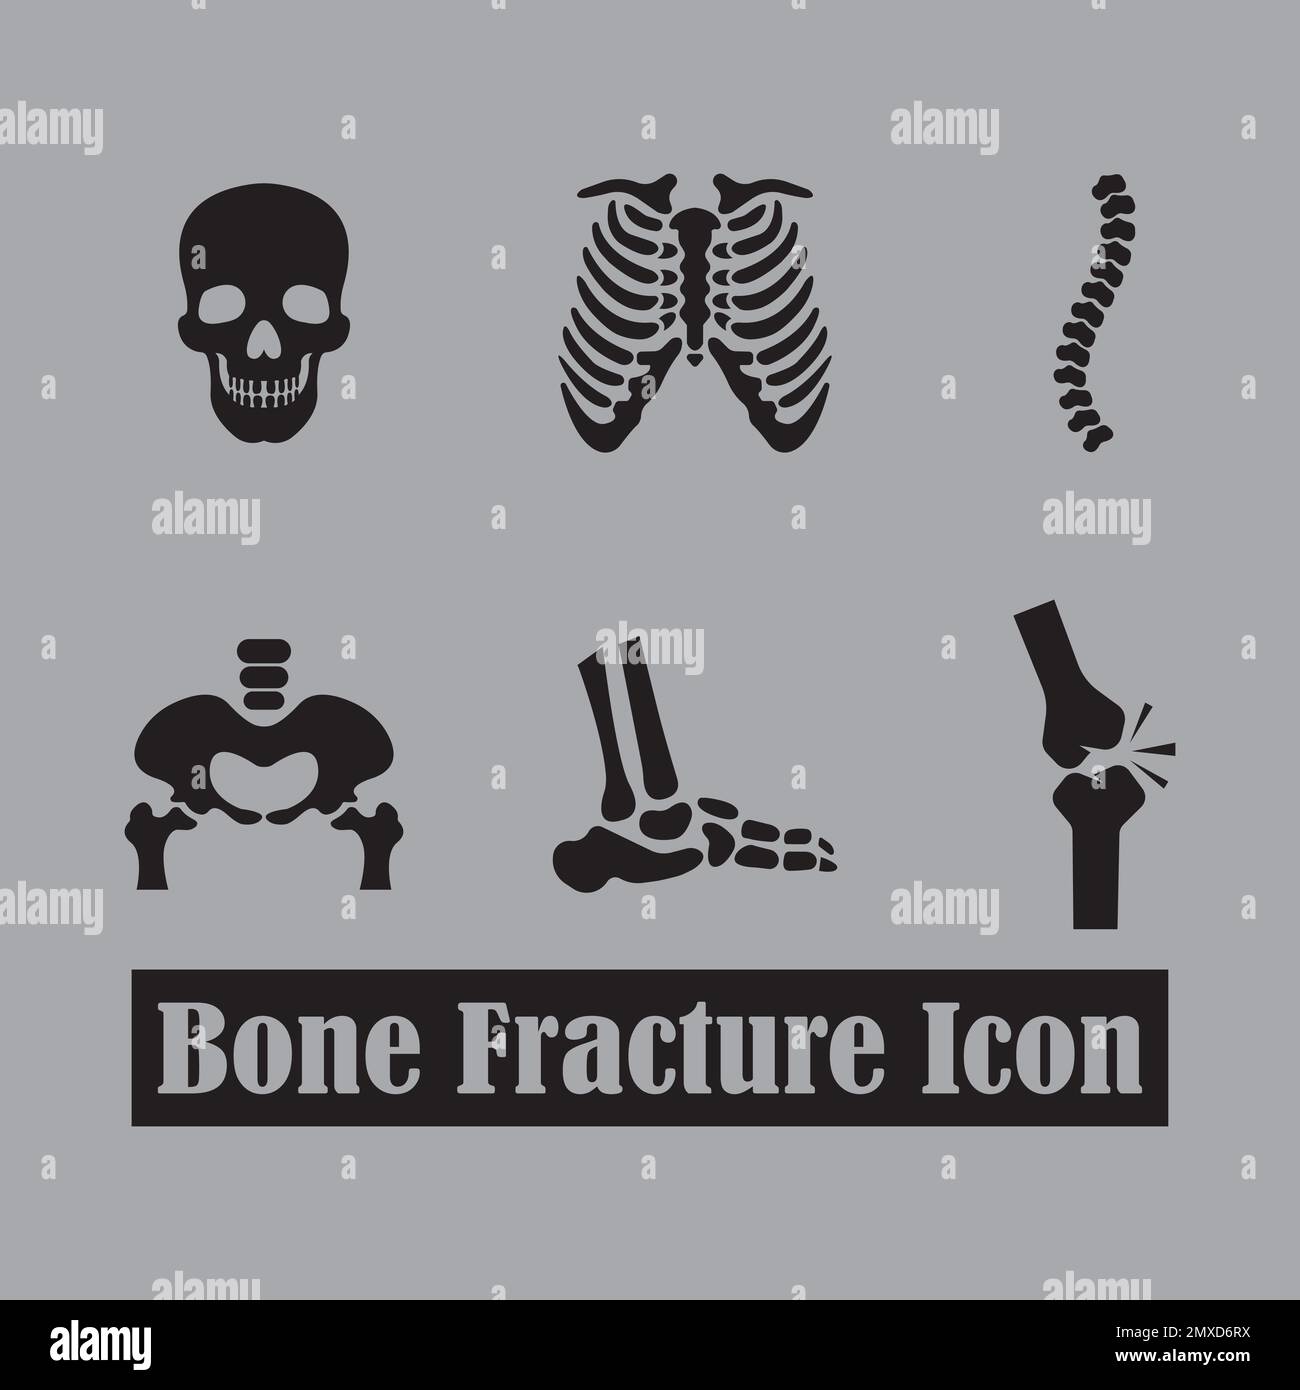 Bone fracture icon vector illustration design template. Stock Vector